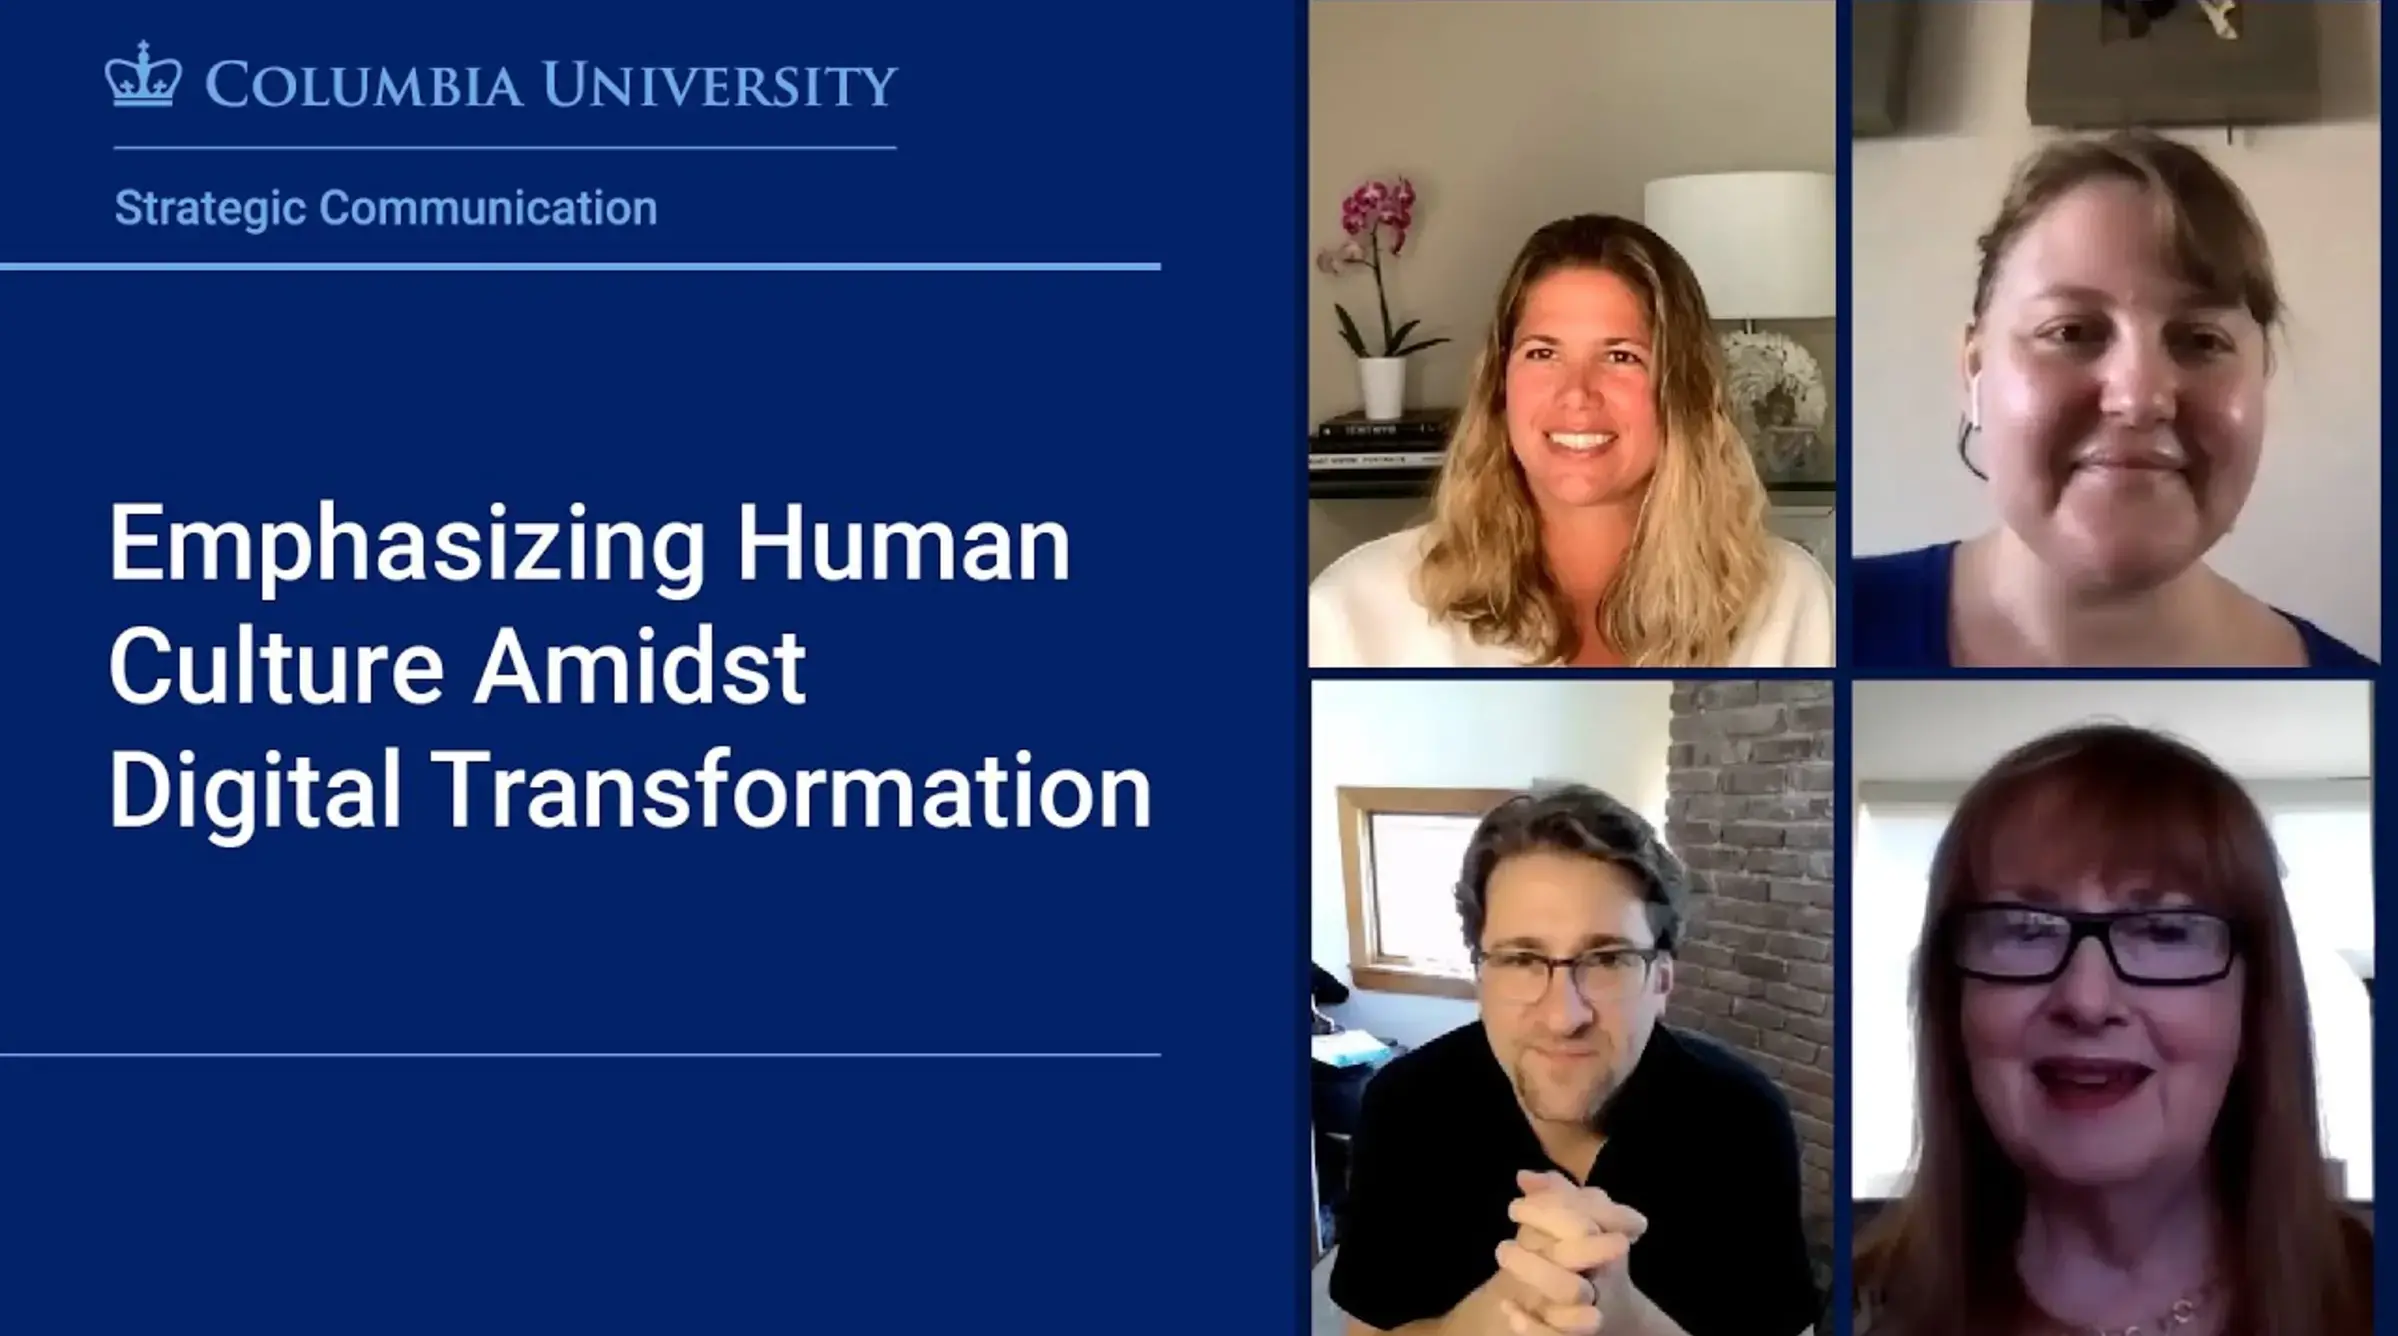 Strategic Communication: Emphasizing Human Culture Amidst Digital Transformation